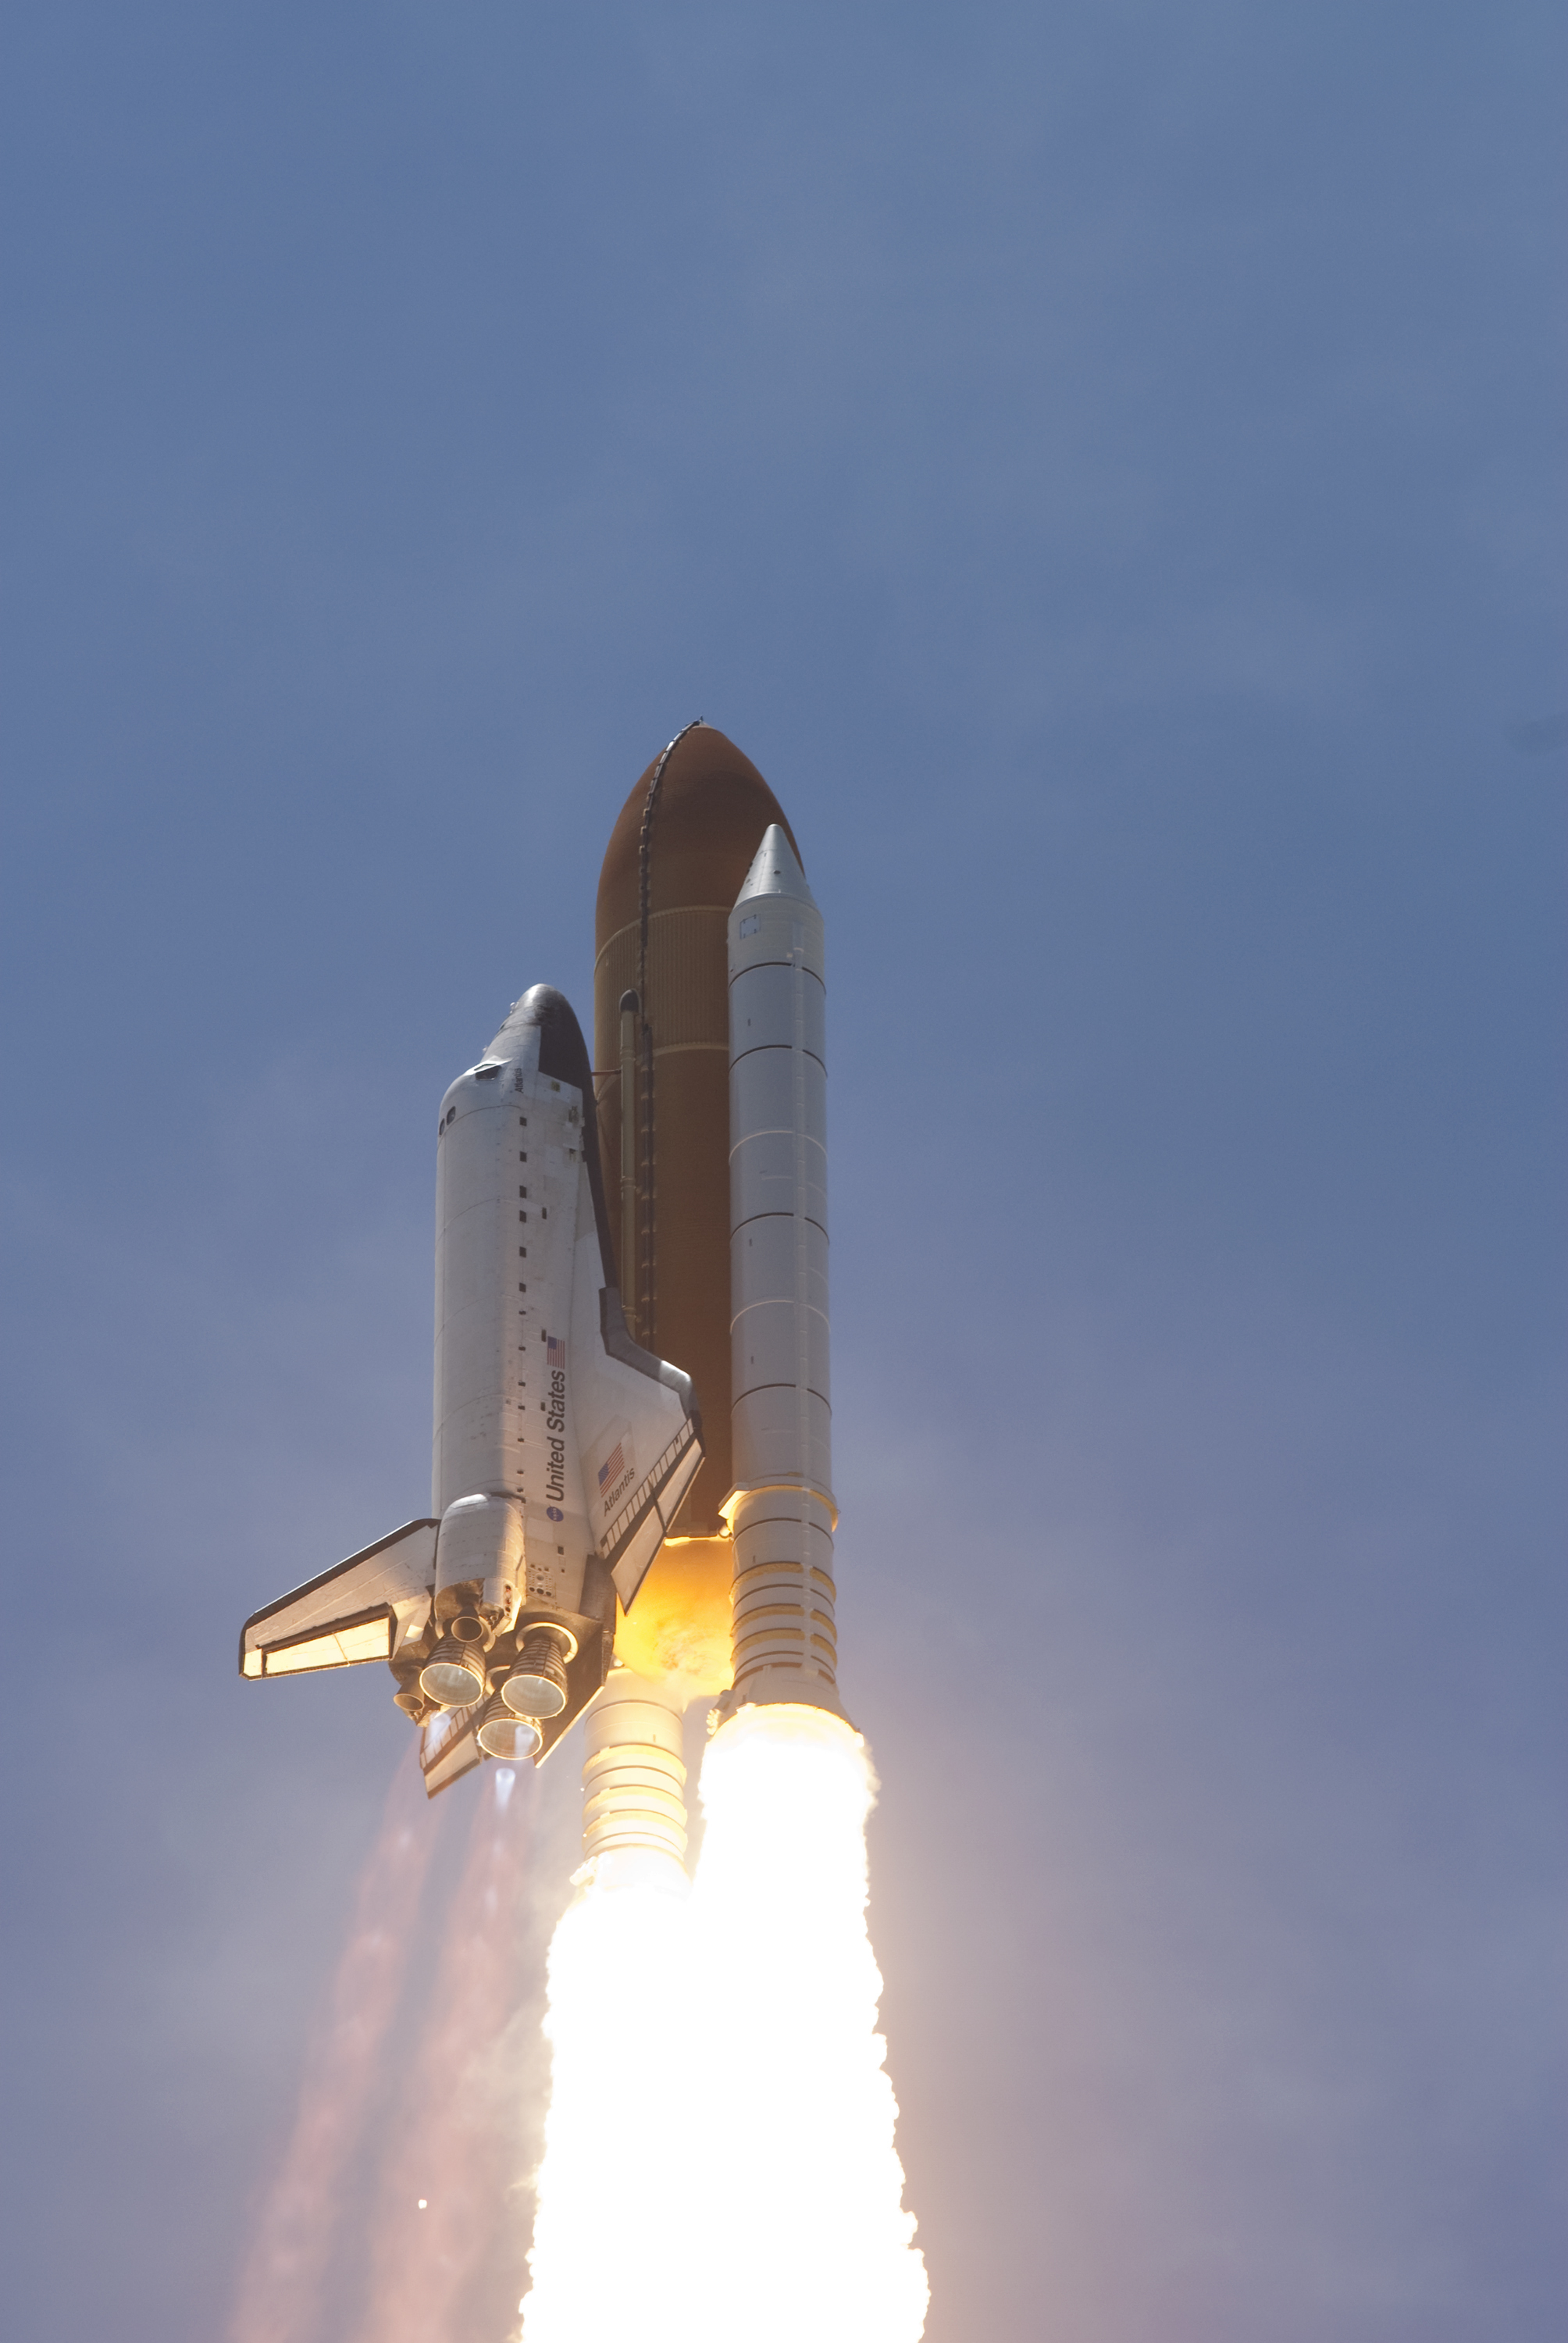 space shuttle engines firing